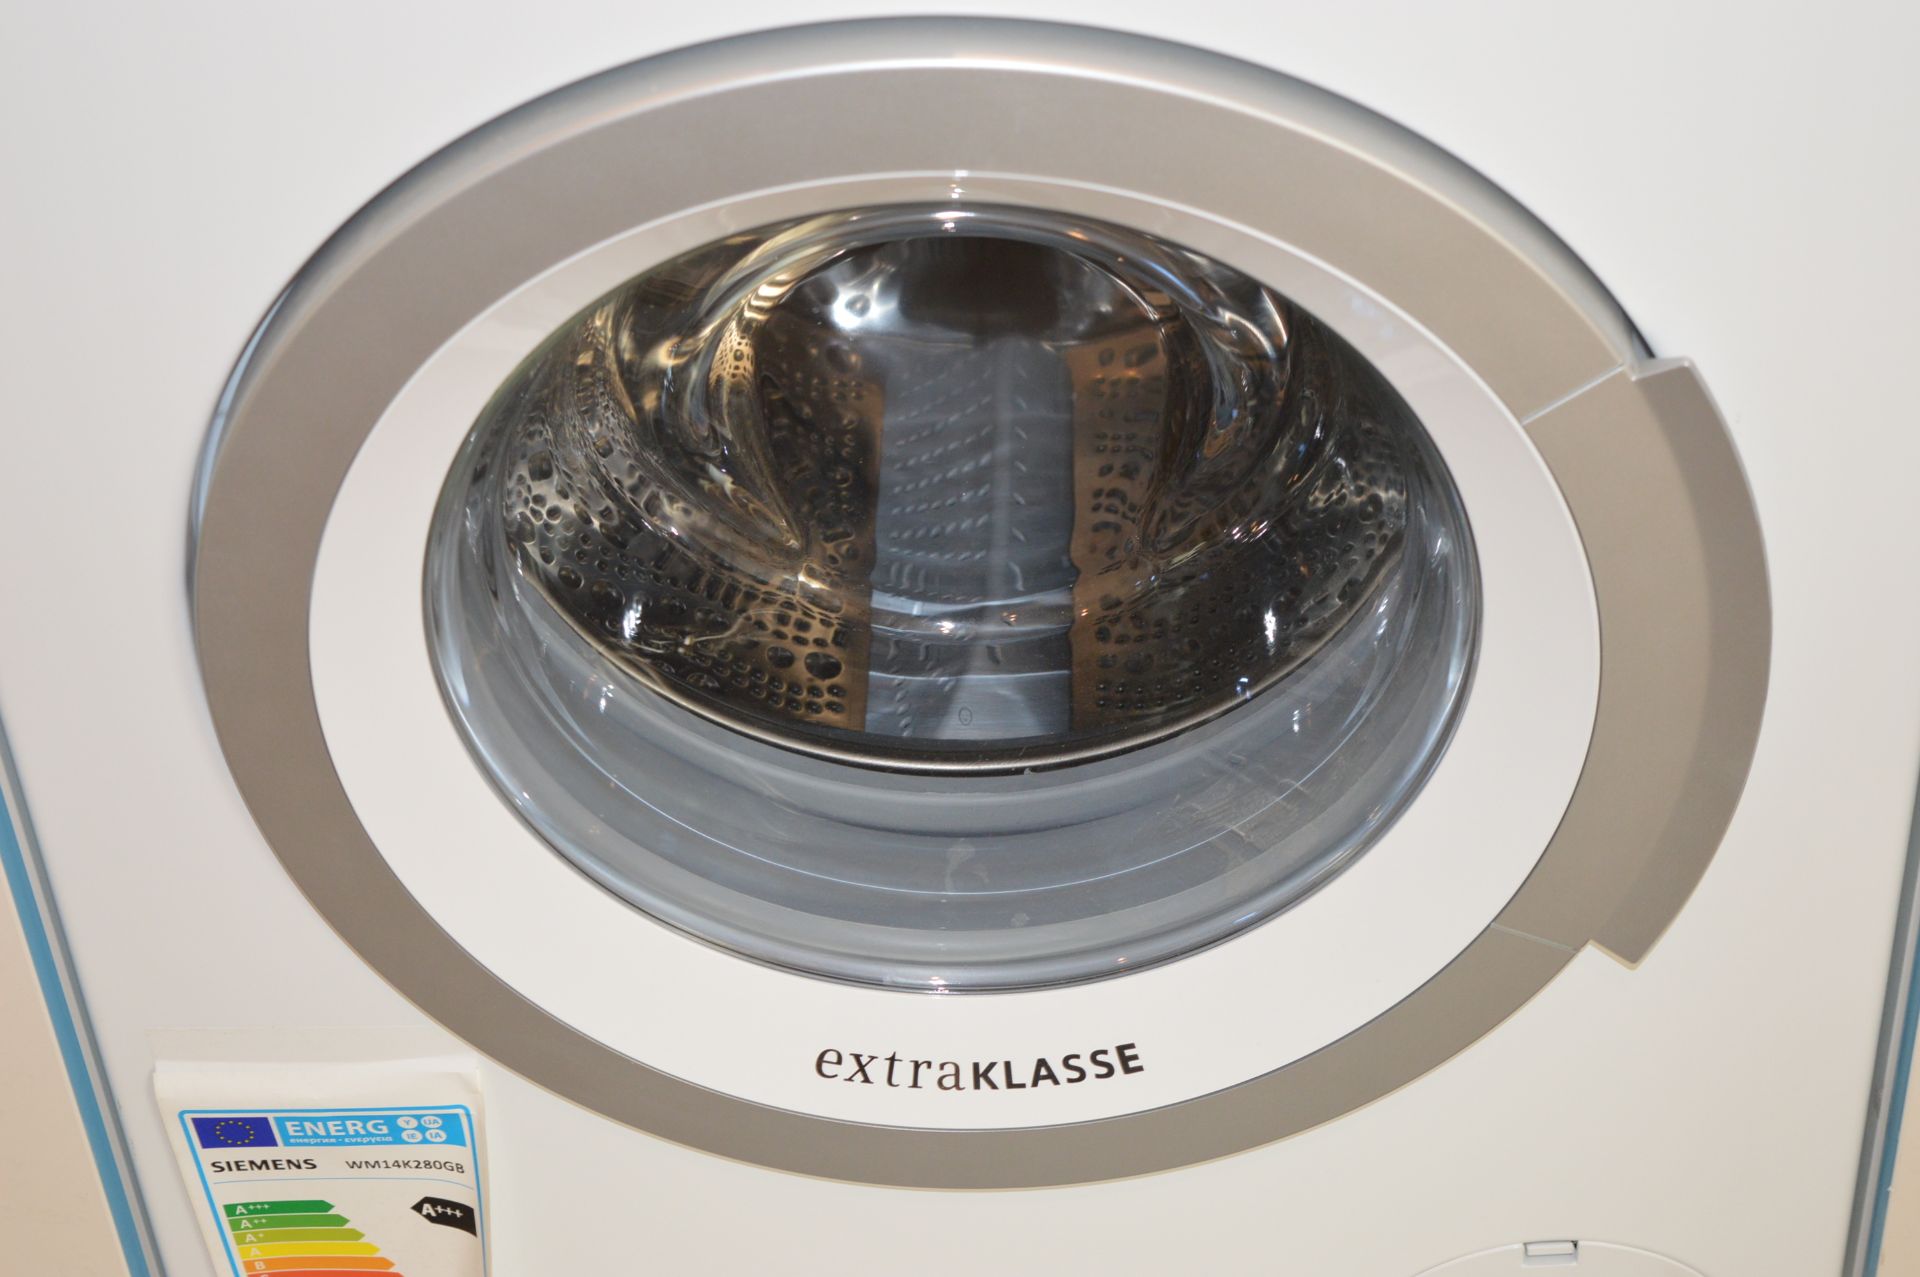 1 x Siemens iQ300 extraKlasse Front Loading Automatic Washing Machine - Model Product IDWM14K280GB - - Image 6 of 9